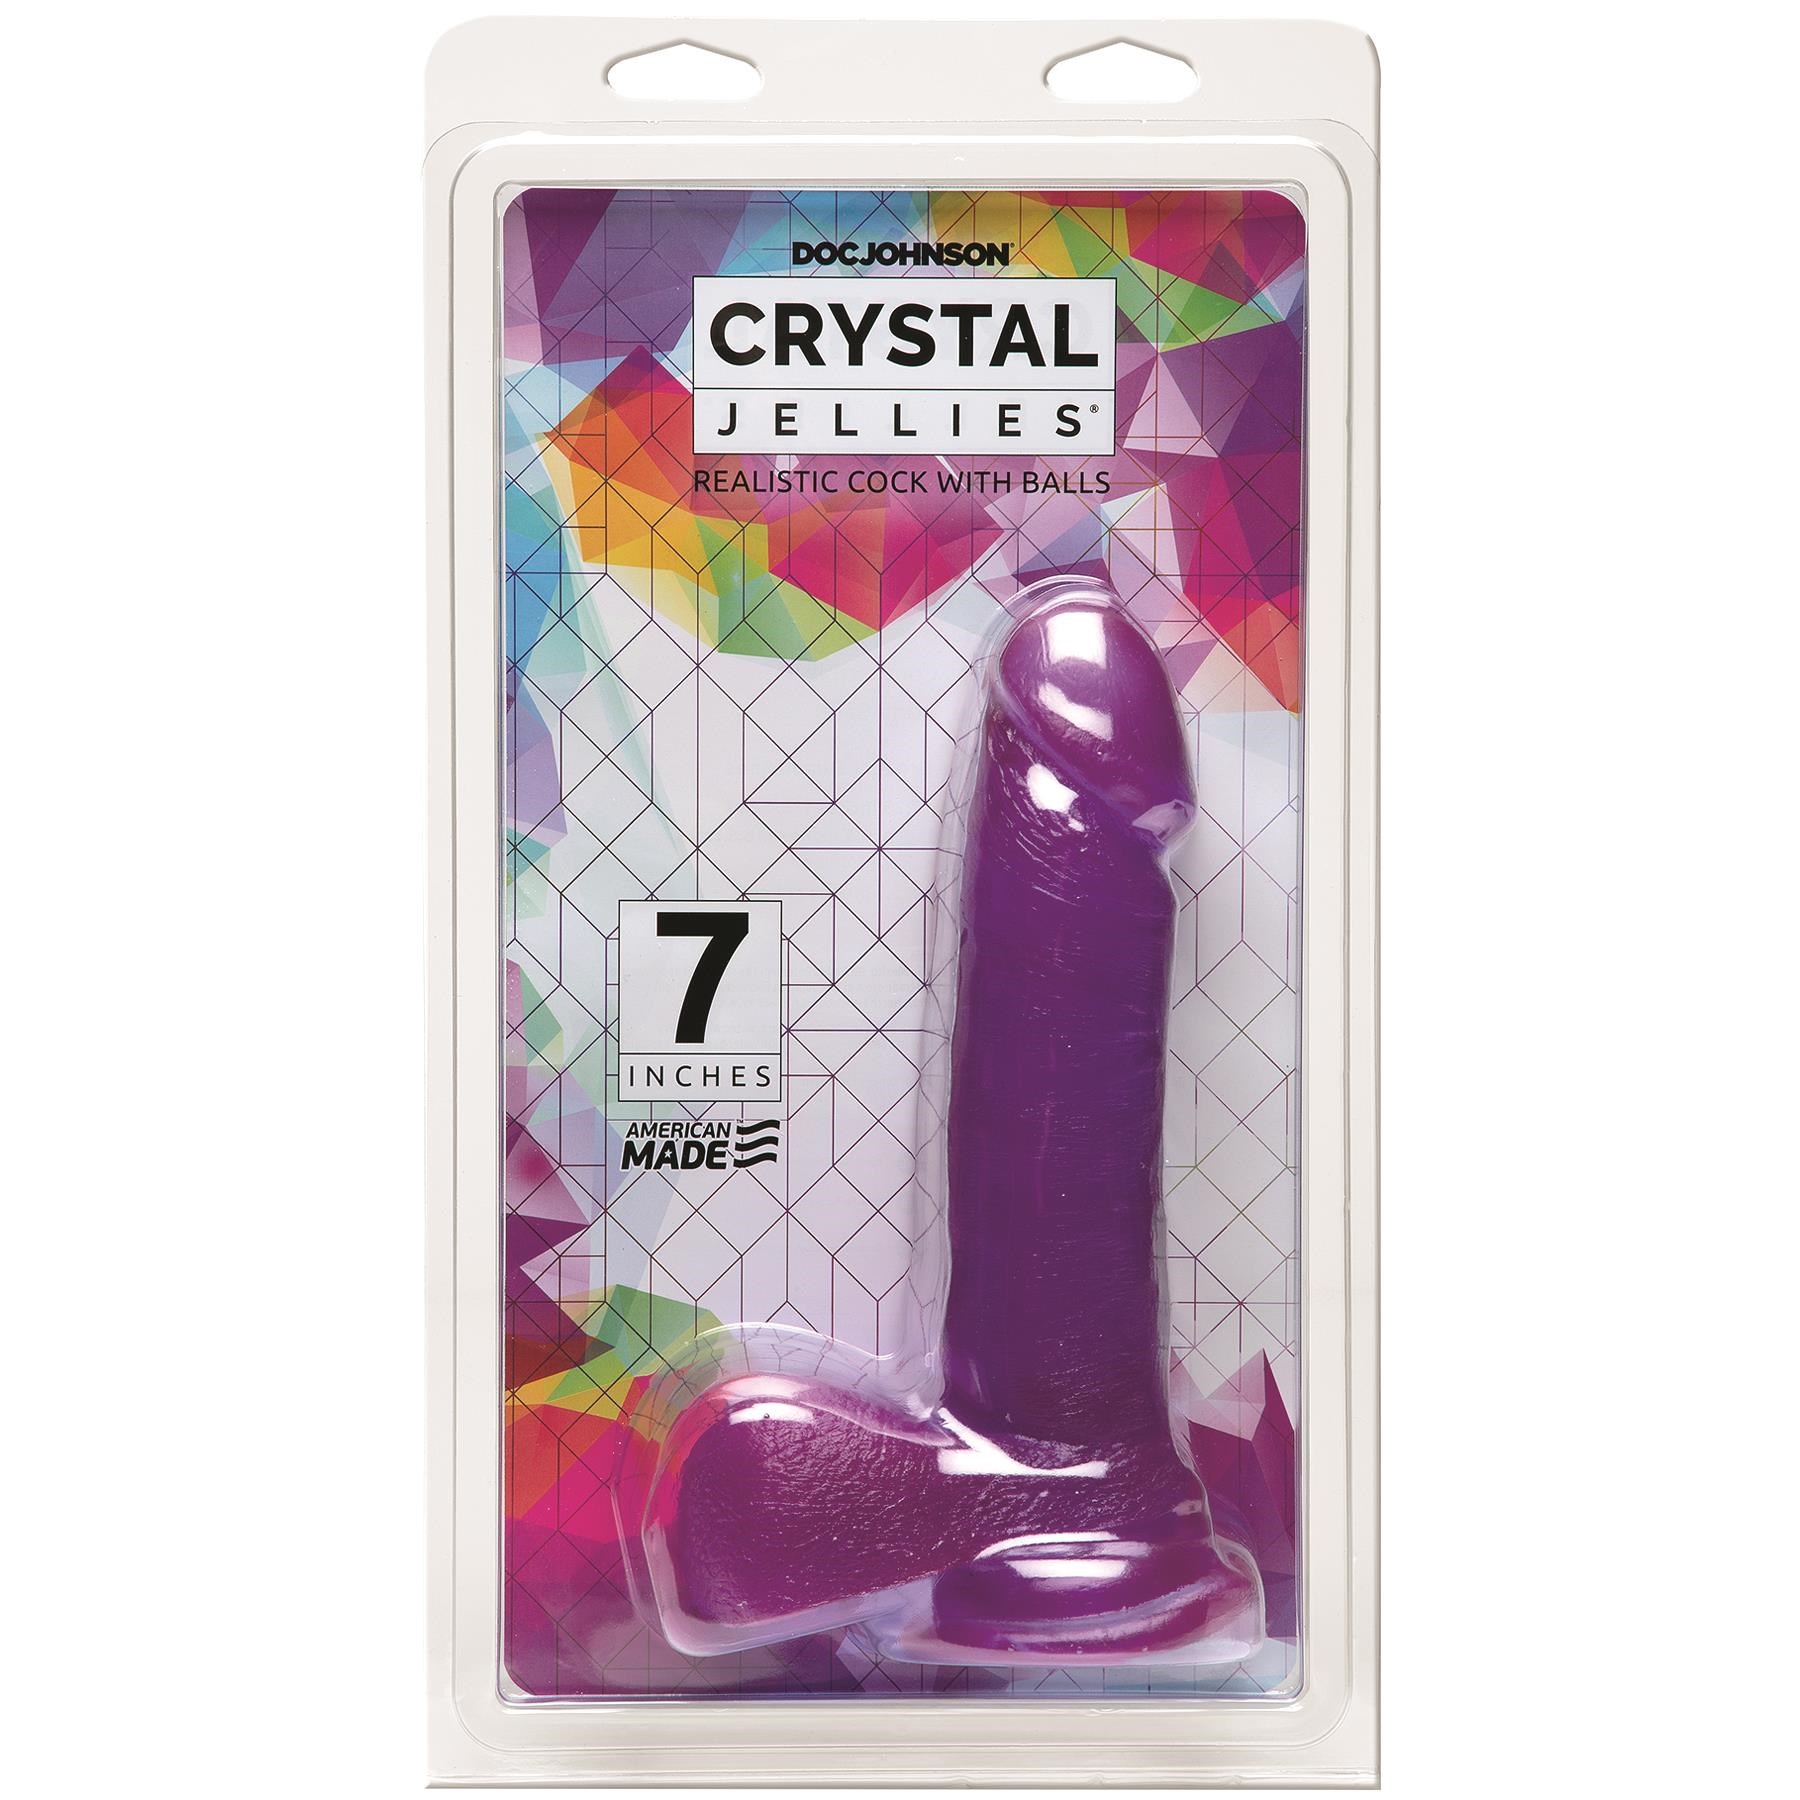 Crystal Jellies 6" Ballsy Dildo Package Shot